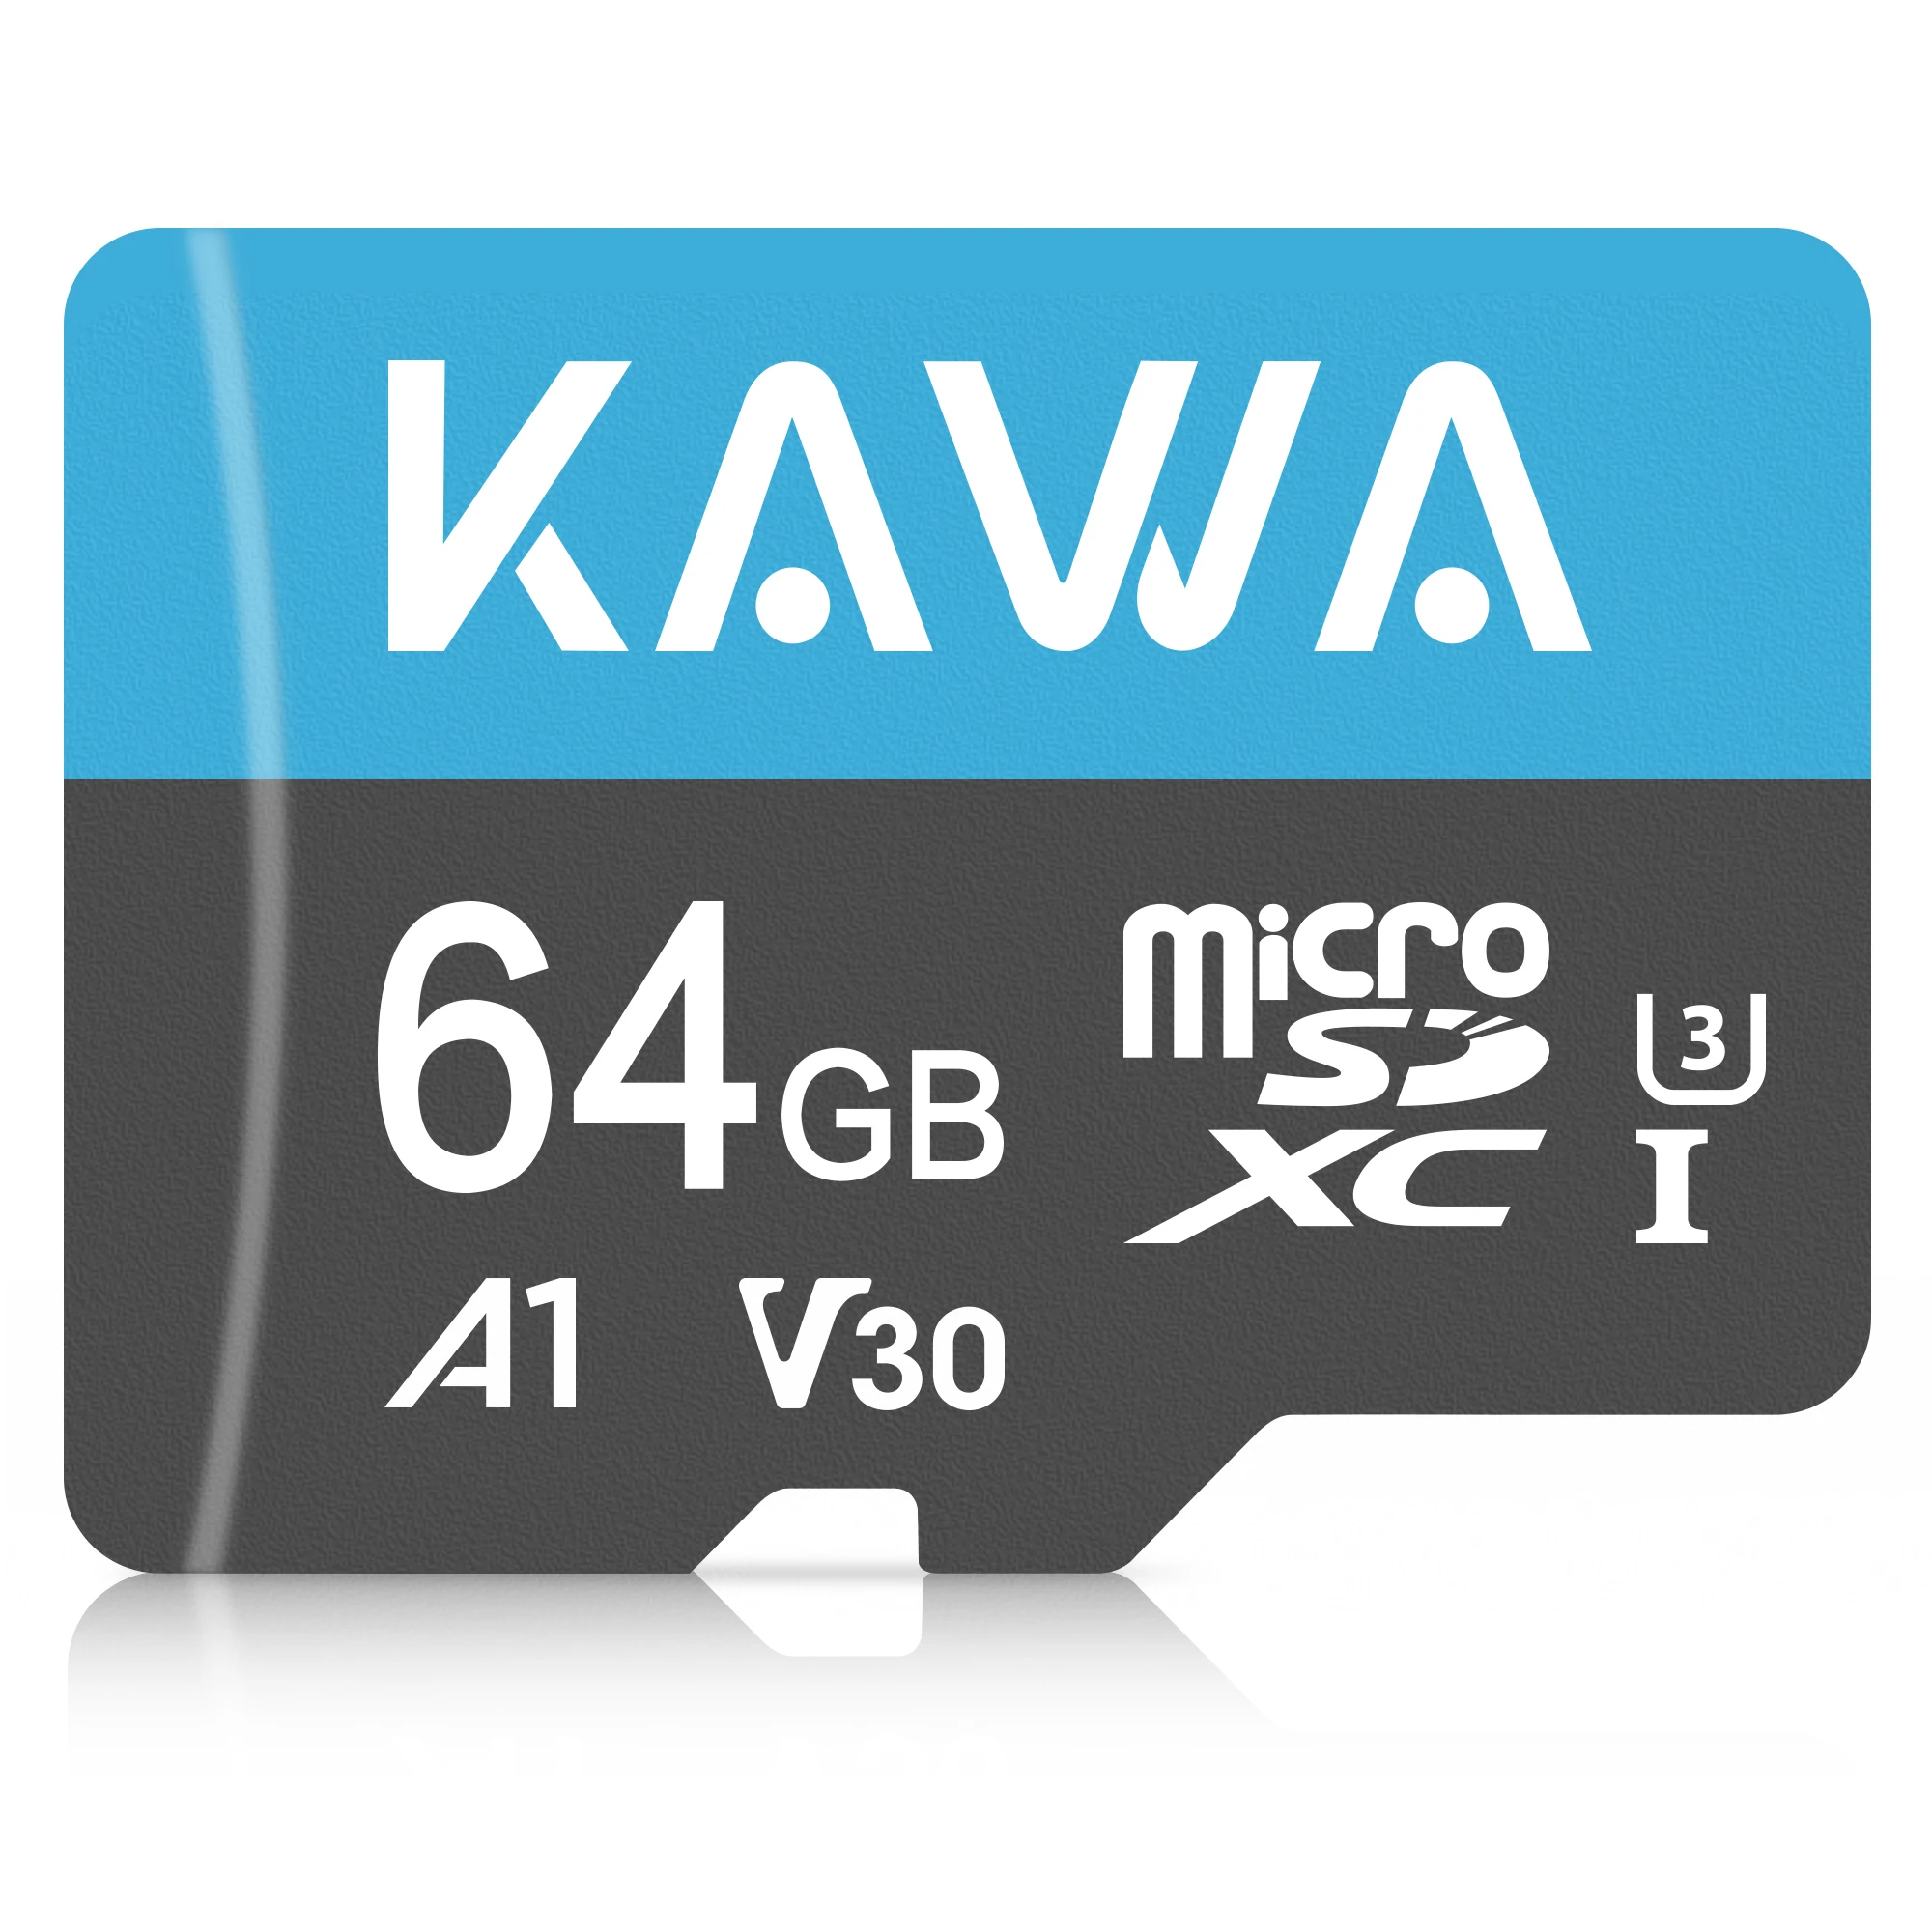 Tanio KAWA 64GB karta Micro SD karta pamięci